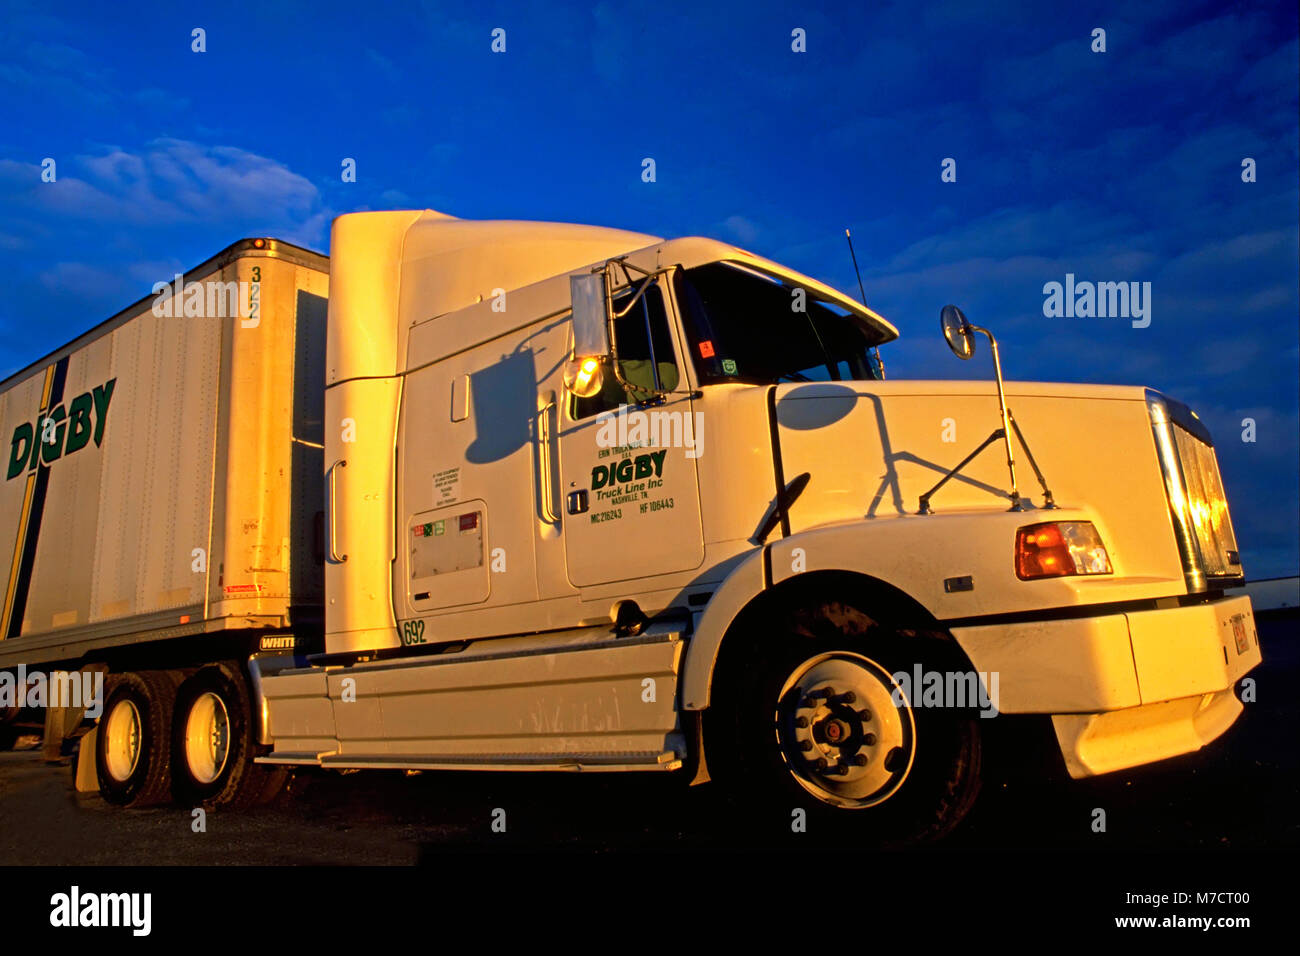 American truck, trailer, Georgia, USA Stock Photo